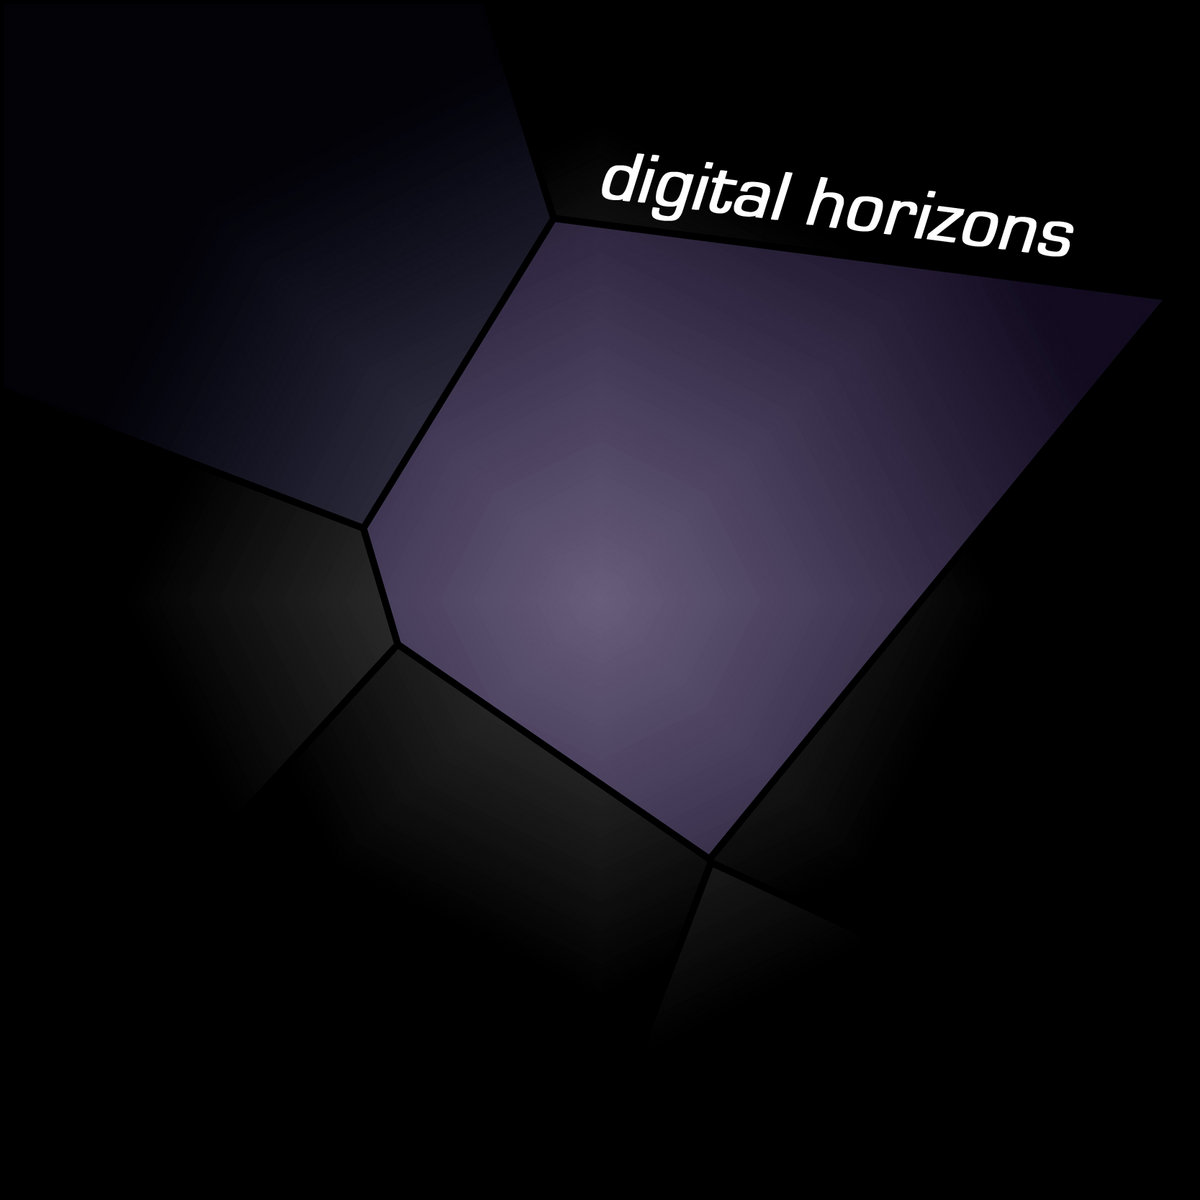 Digital horizon